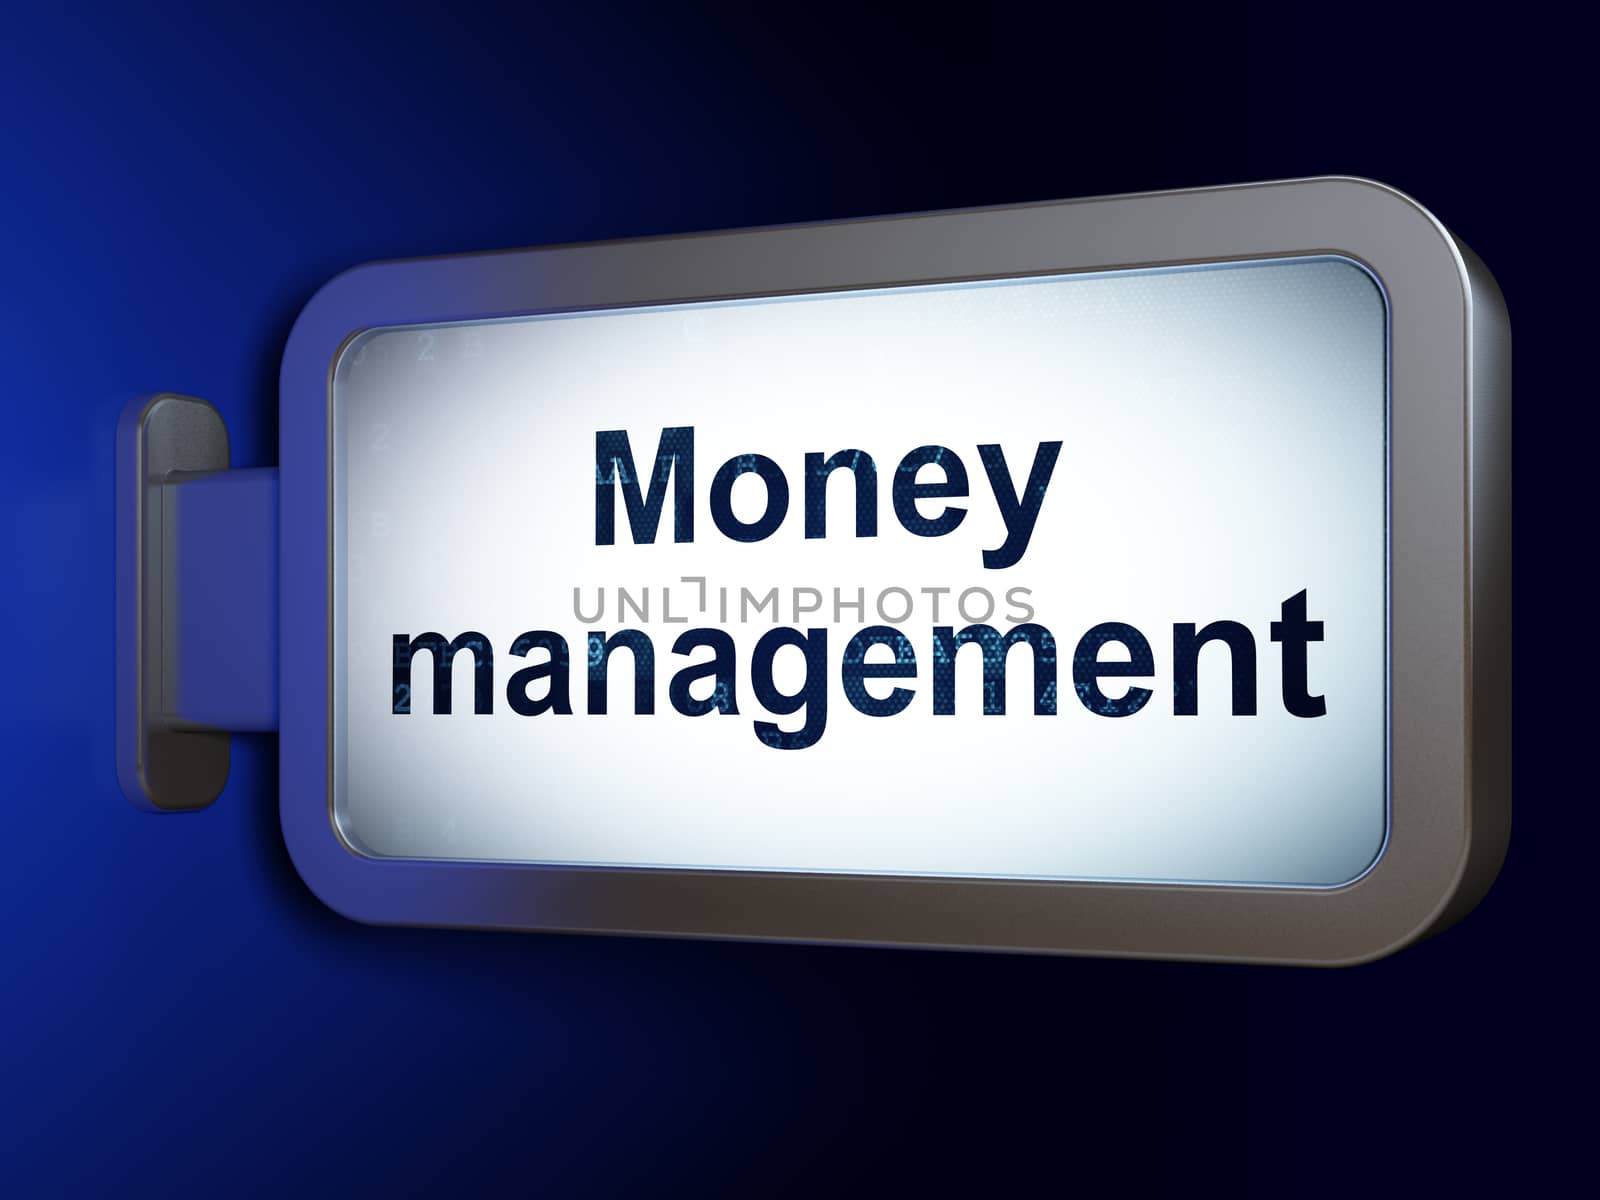 Money concept: Money Management on advertising billboard background, 3D rendering